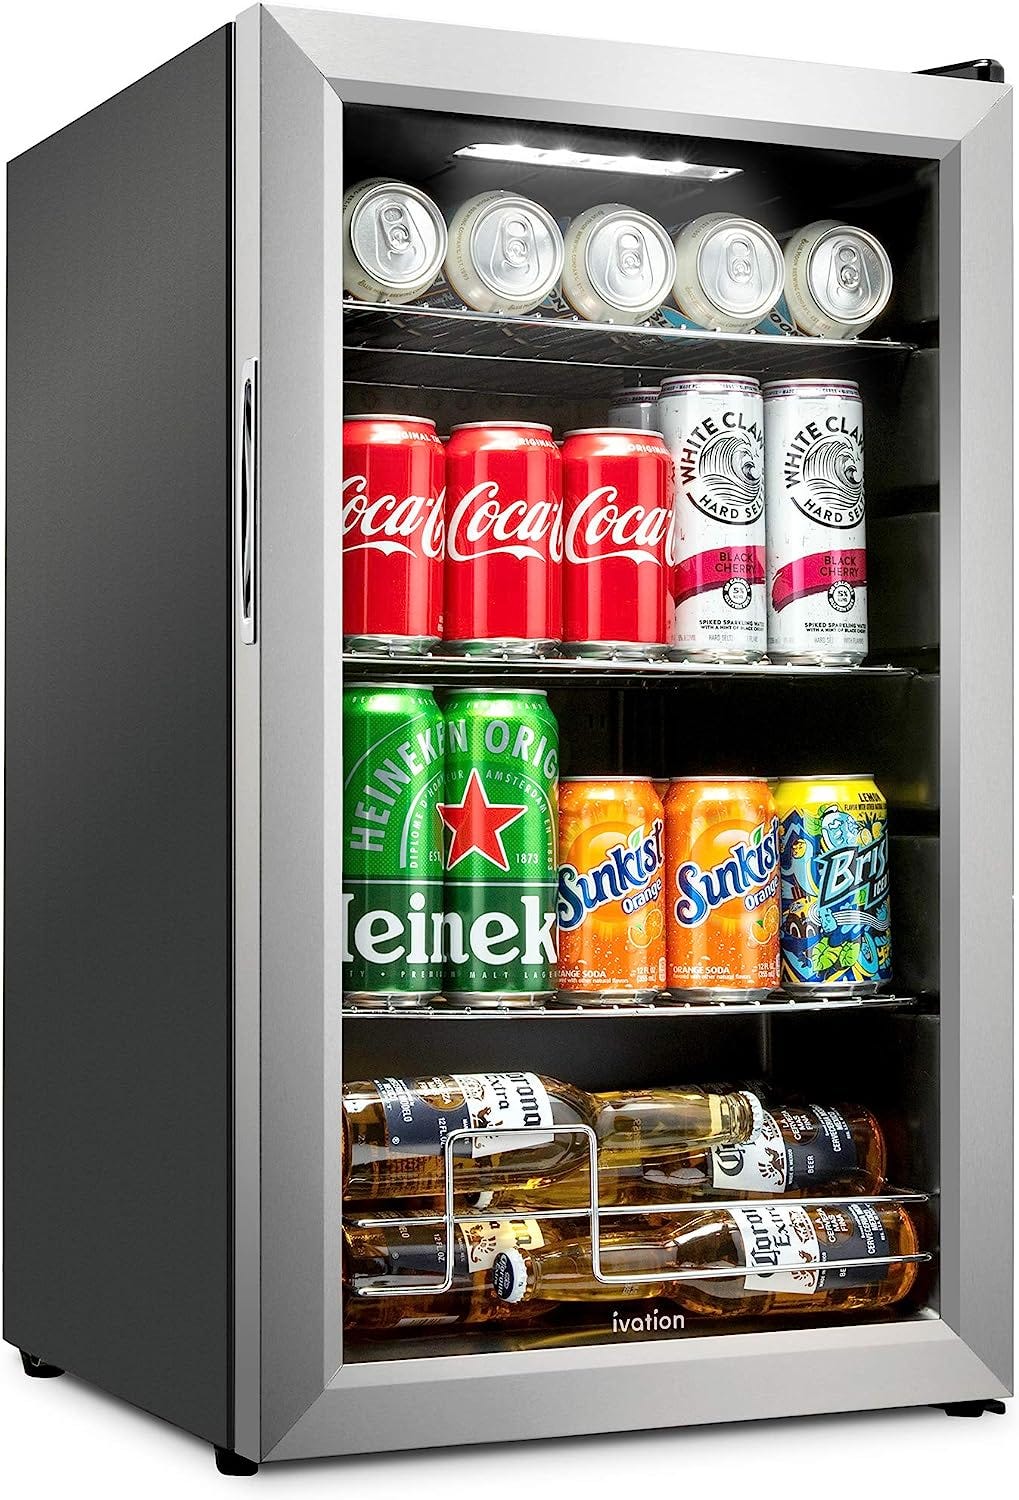 Ca'Lefort 15 inch Wide 100 Can Beverage Refrigerator, Freestanding